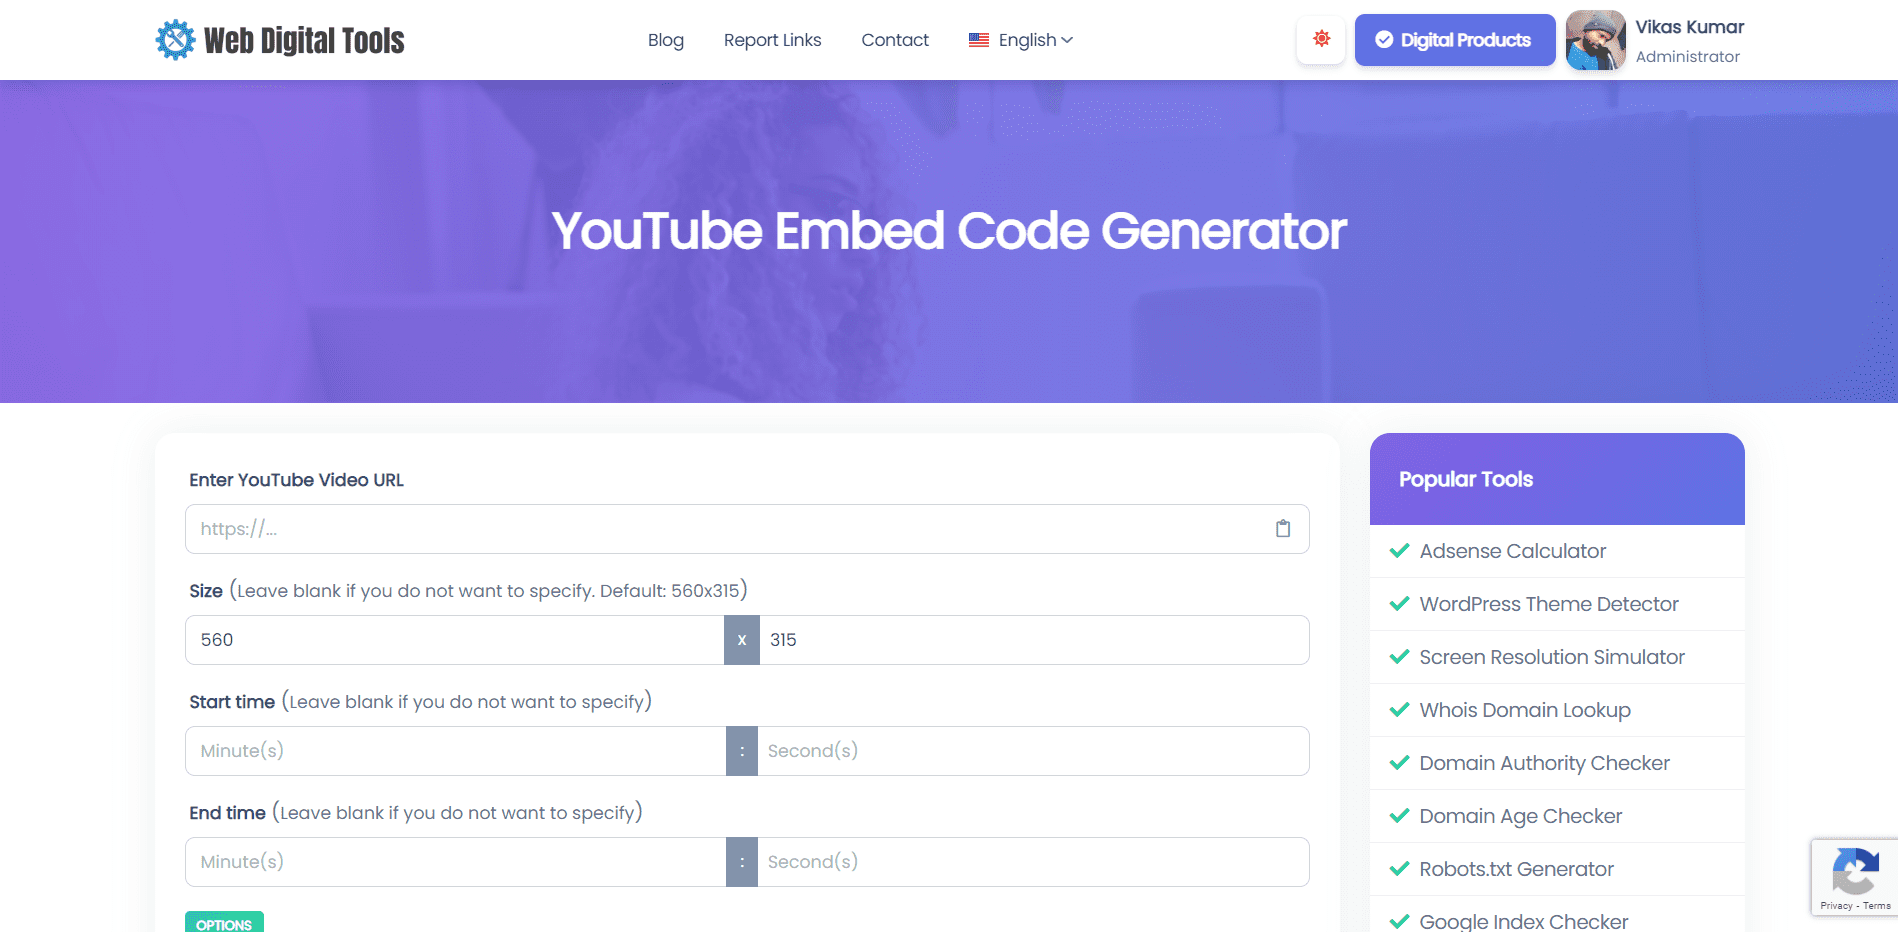 YouTube Embed Code Generator